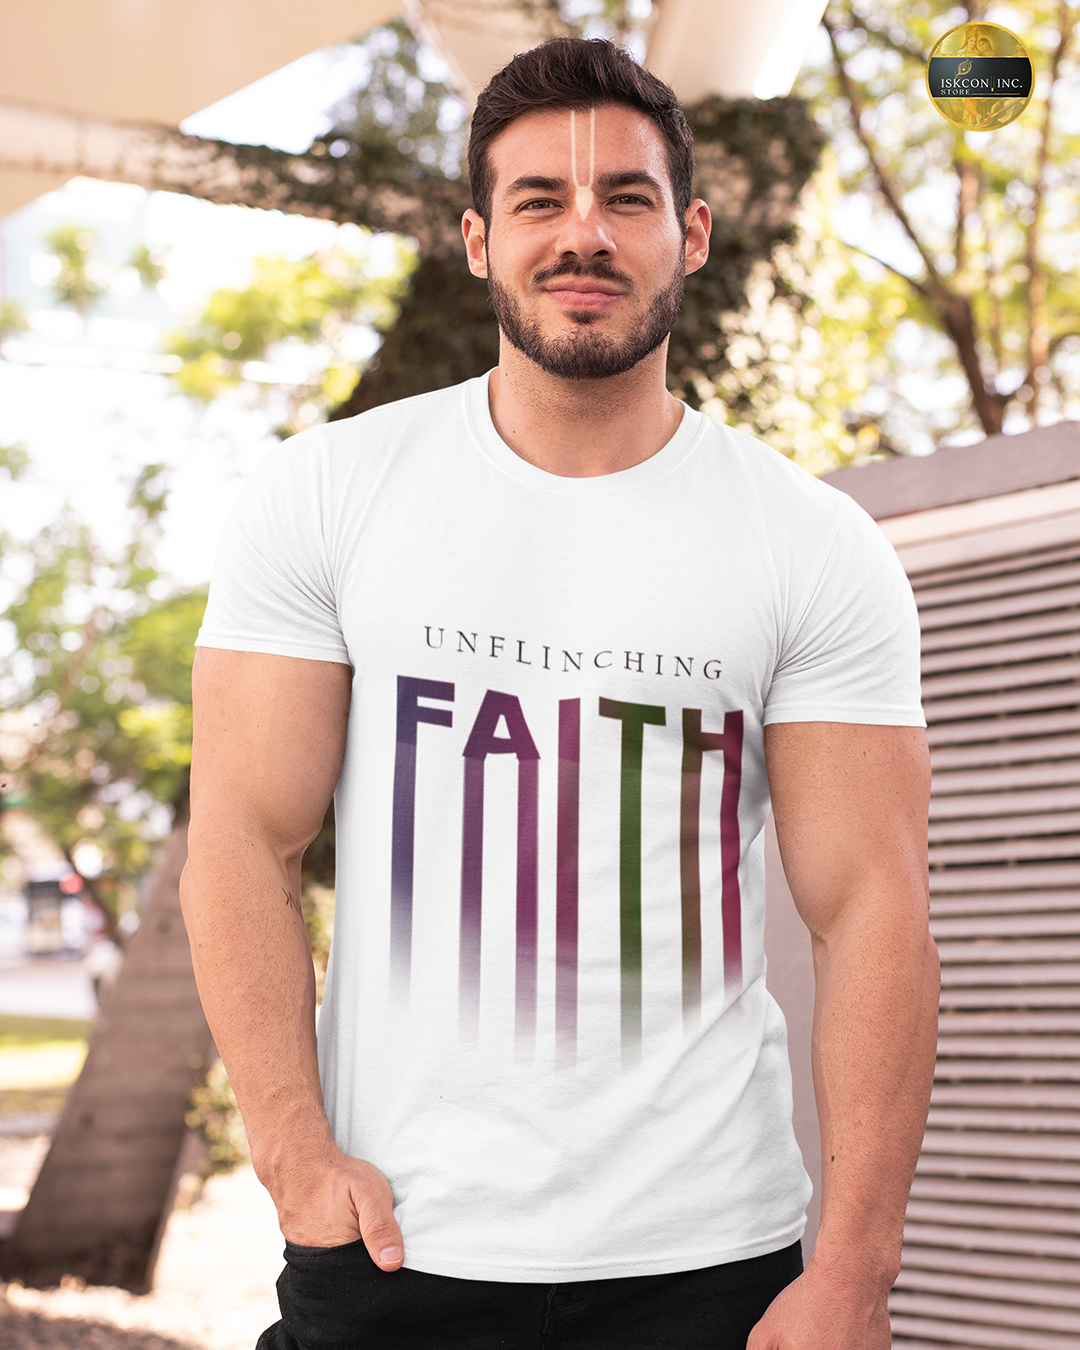 Unflinching Faith Tshirt for Men